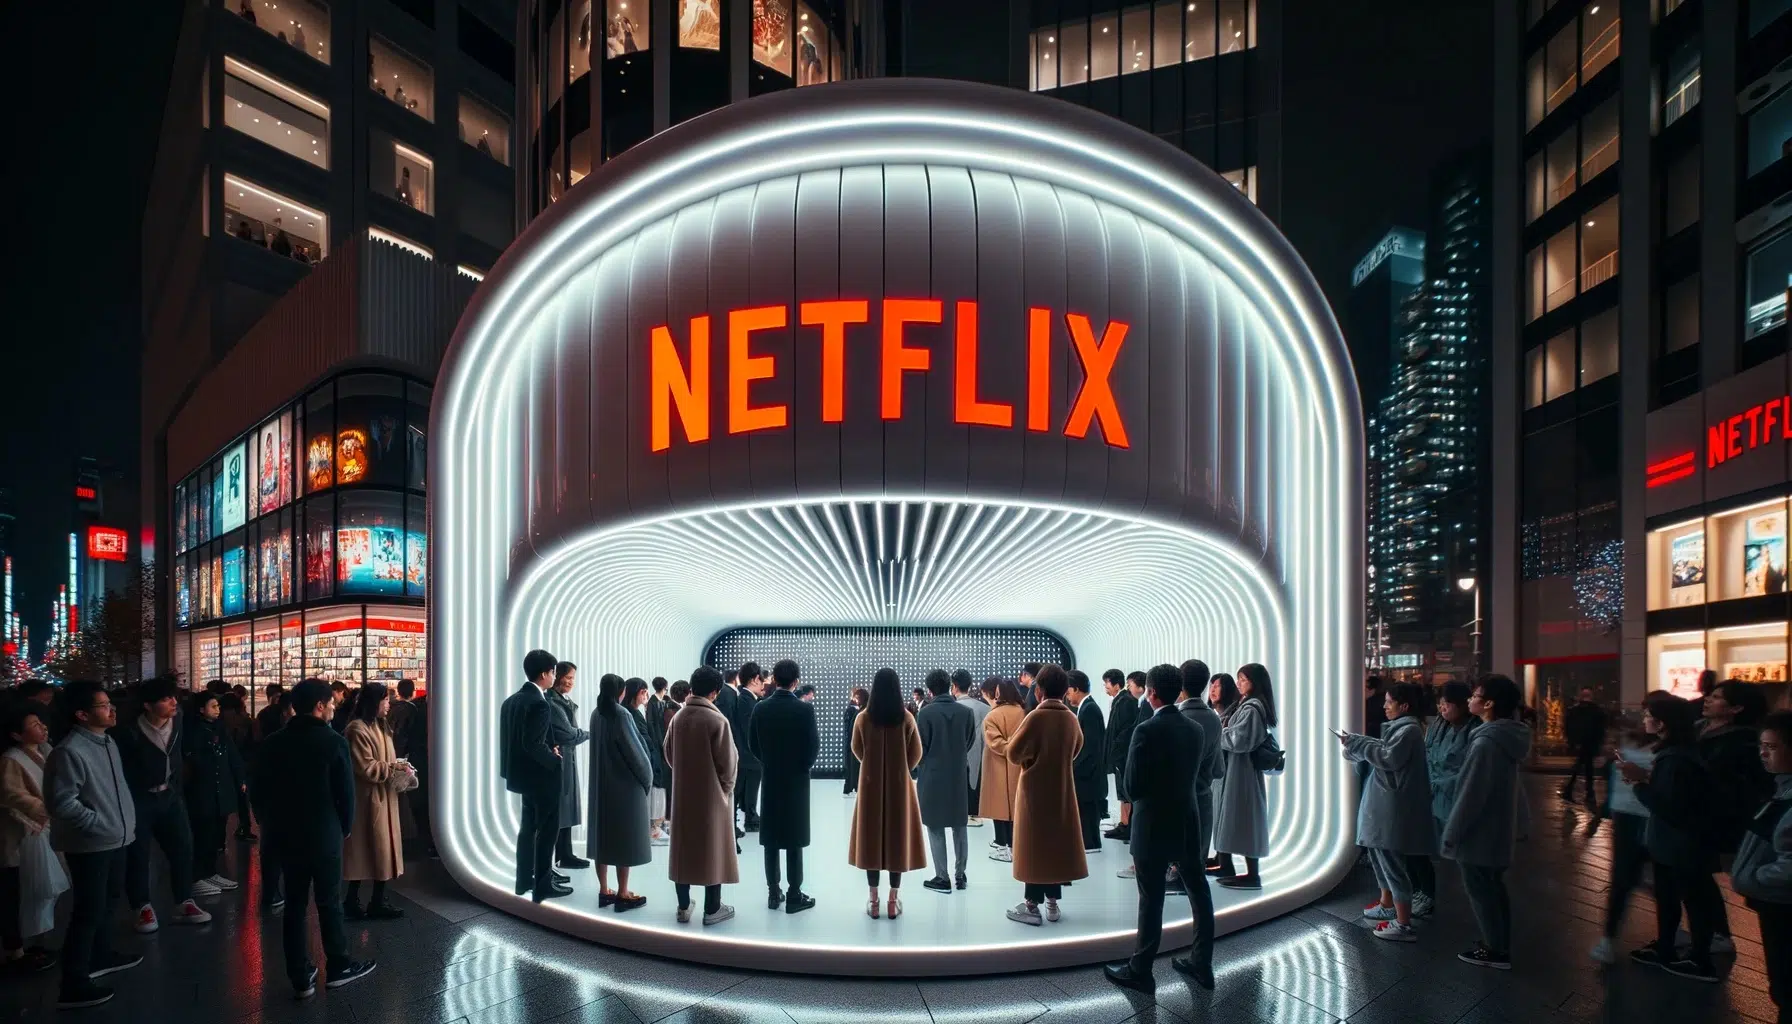 La revolucionaria apuesta de Netflix, ¡Bienvenidos a la Netflix House!